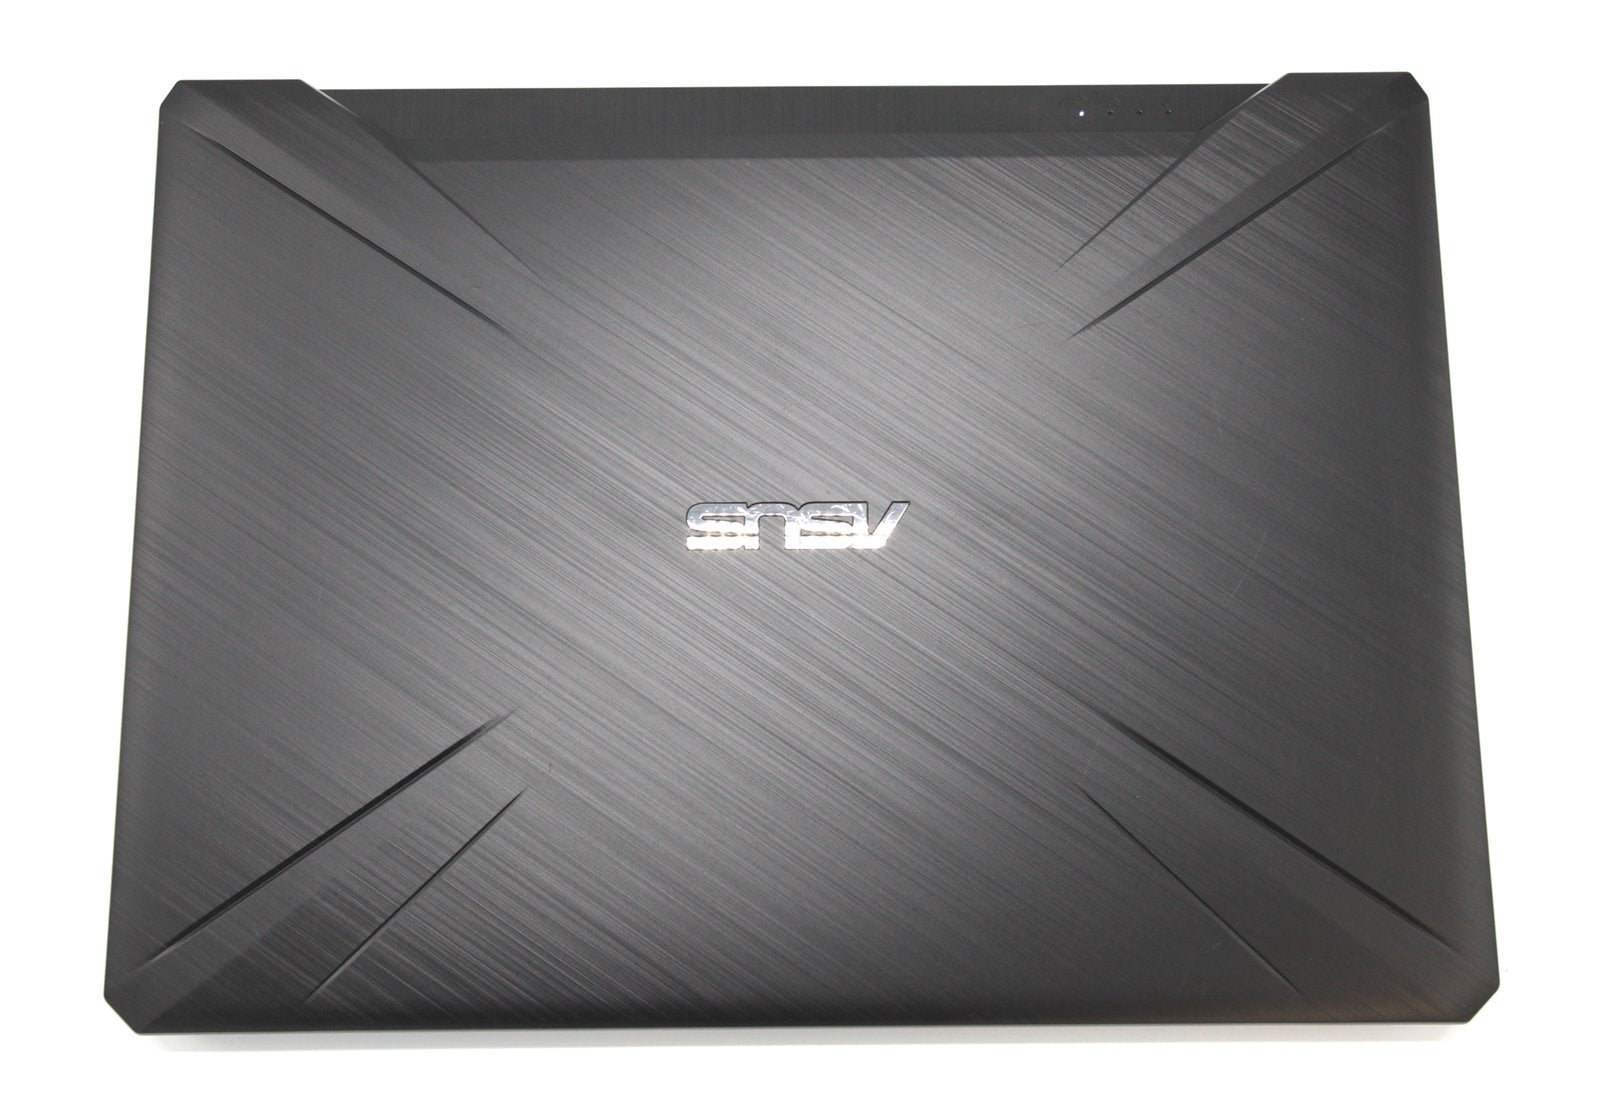 ASUS FX505DV 15.6" Gaming Laptop: RTX 2060, Ryzen 7 3750H, 16GB RAM, 512GB - CruiseTech